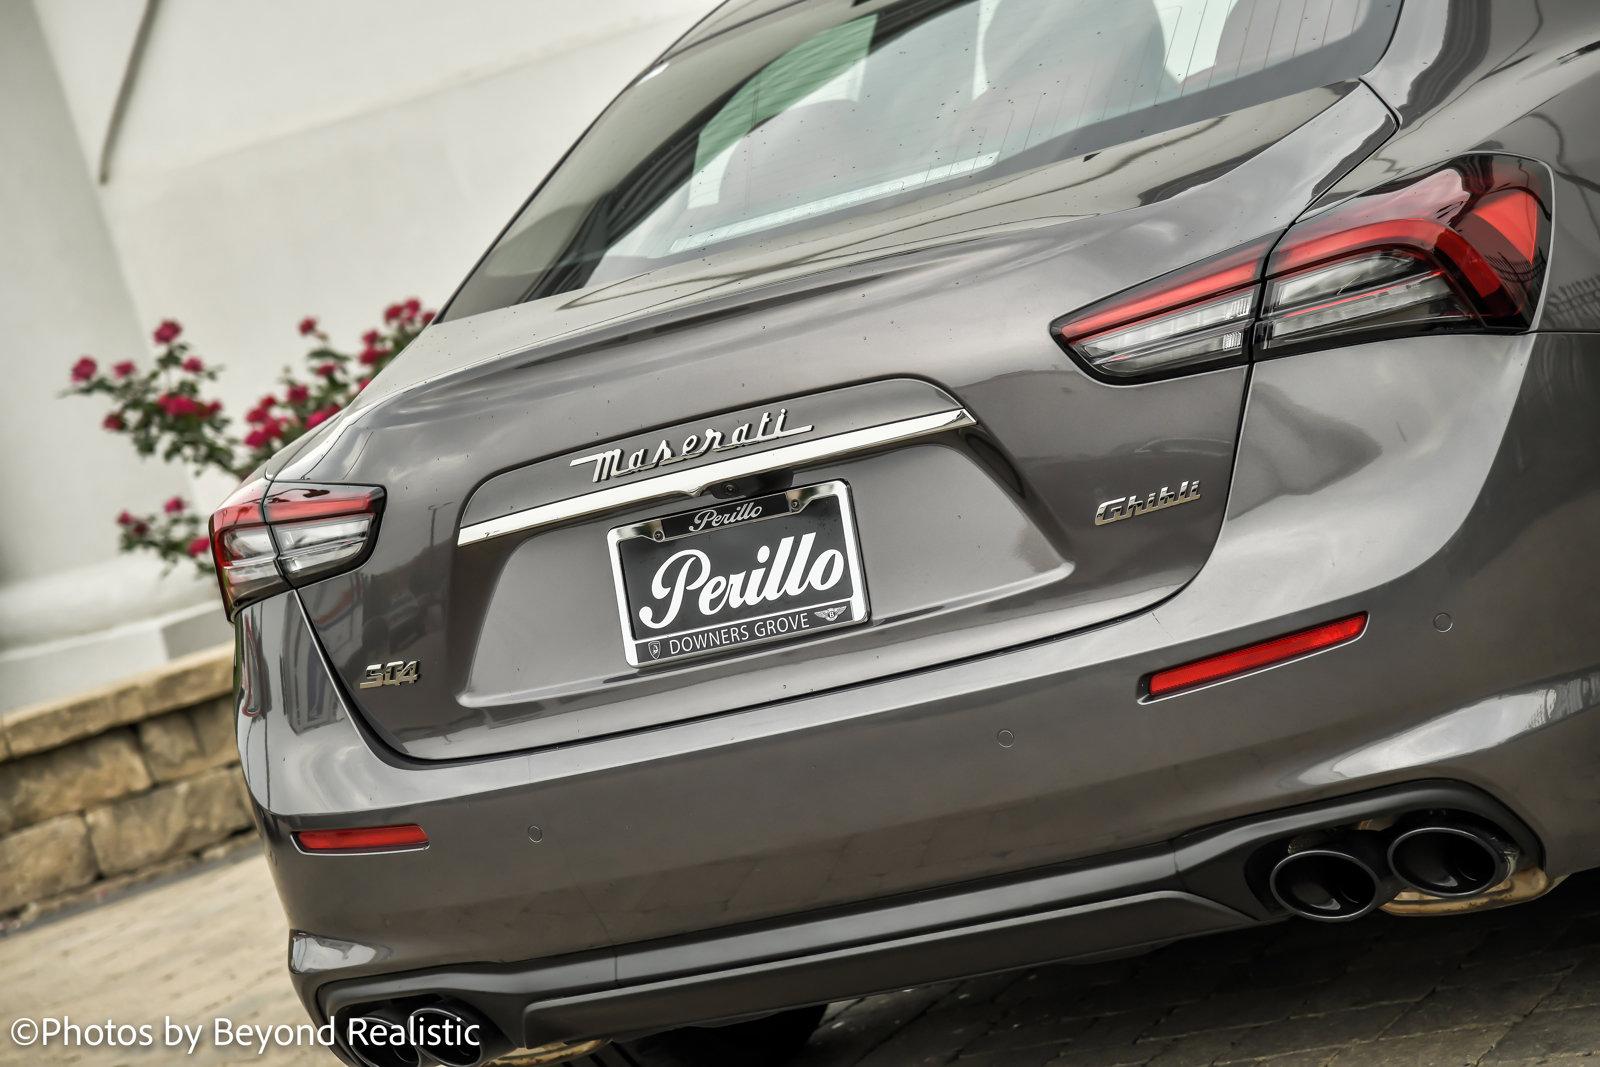 Used 2021 Maserati Ghibli S Q4 | Downers Grove, IL